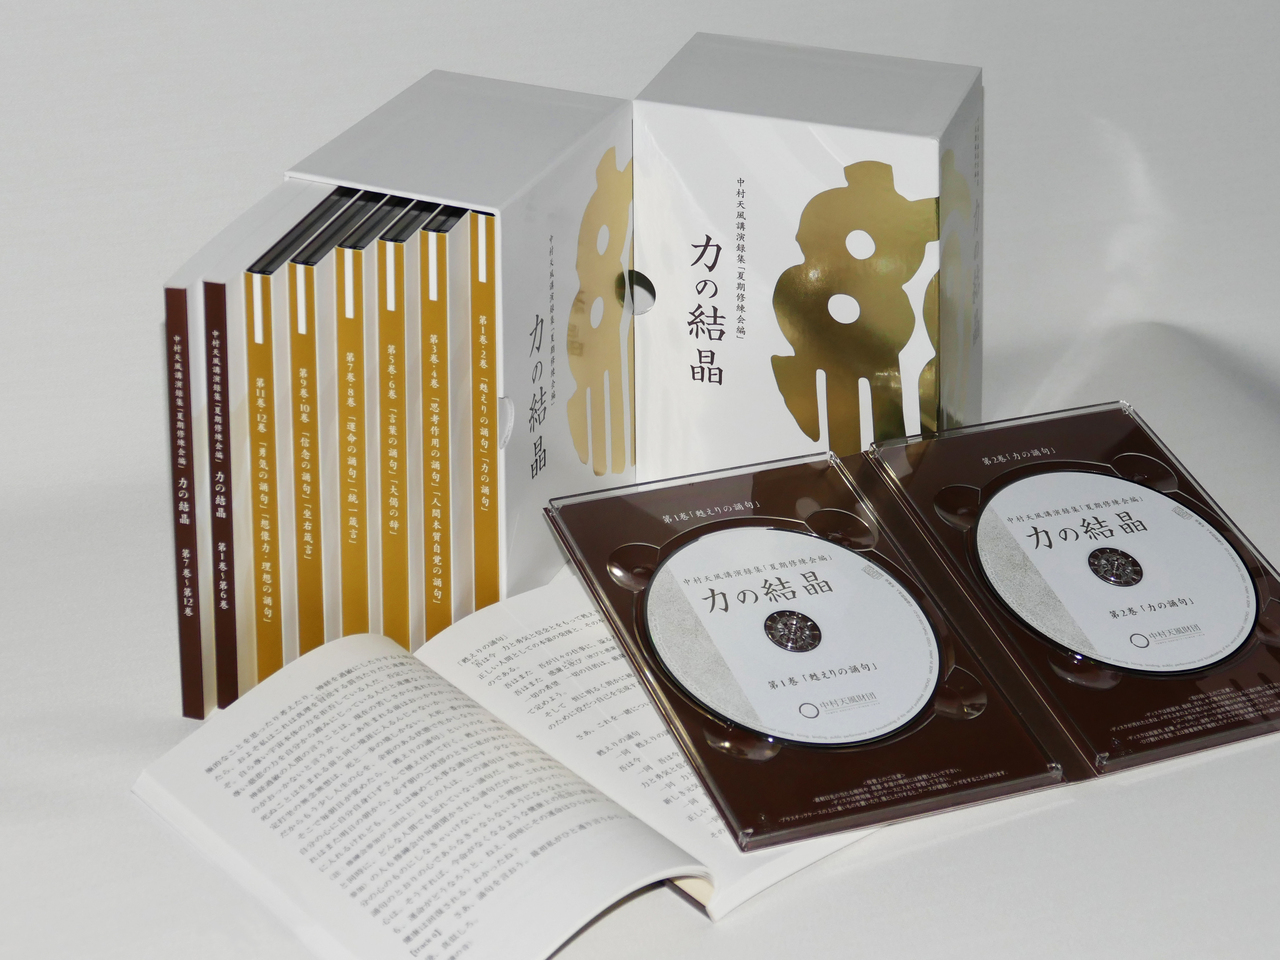 中村天風講演録集「夏期修練会編」力の結晶デジタル版・CD版